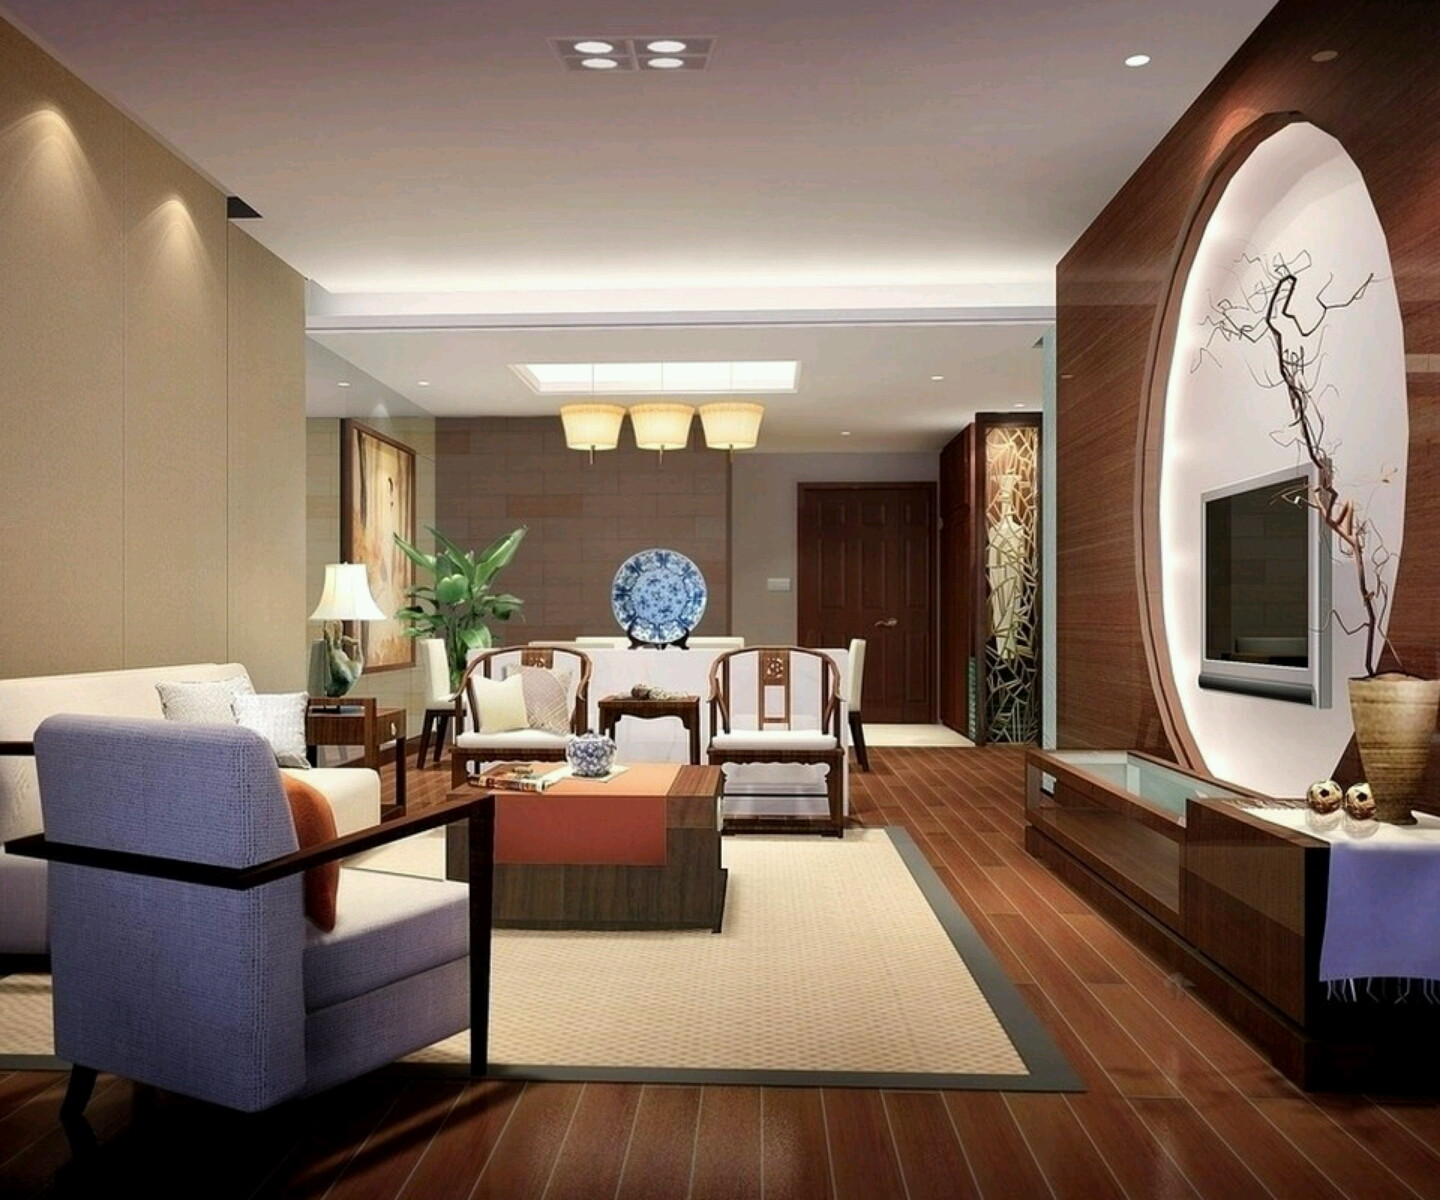 Interior Design Living Room Ideas
 Luxury homes interior decoration living room designs ideas